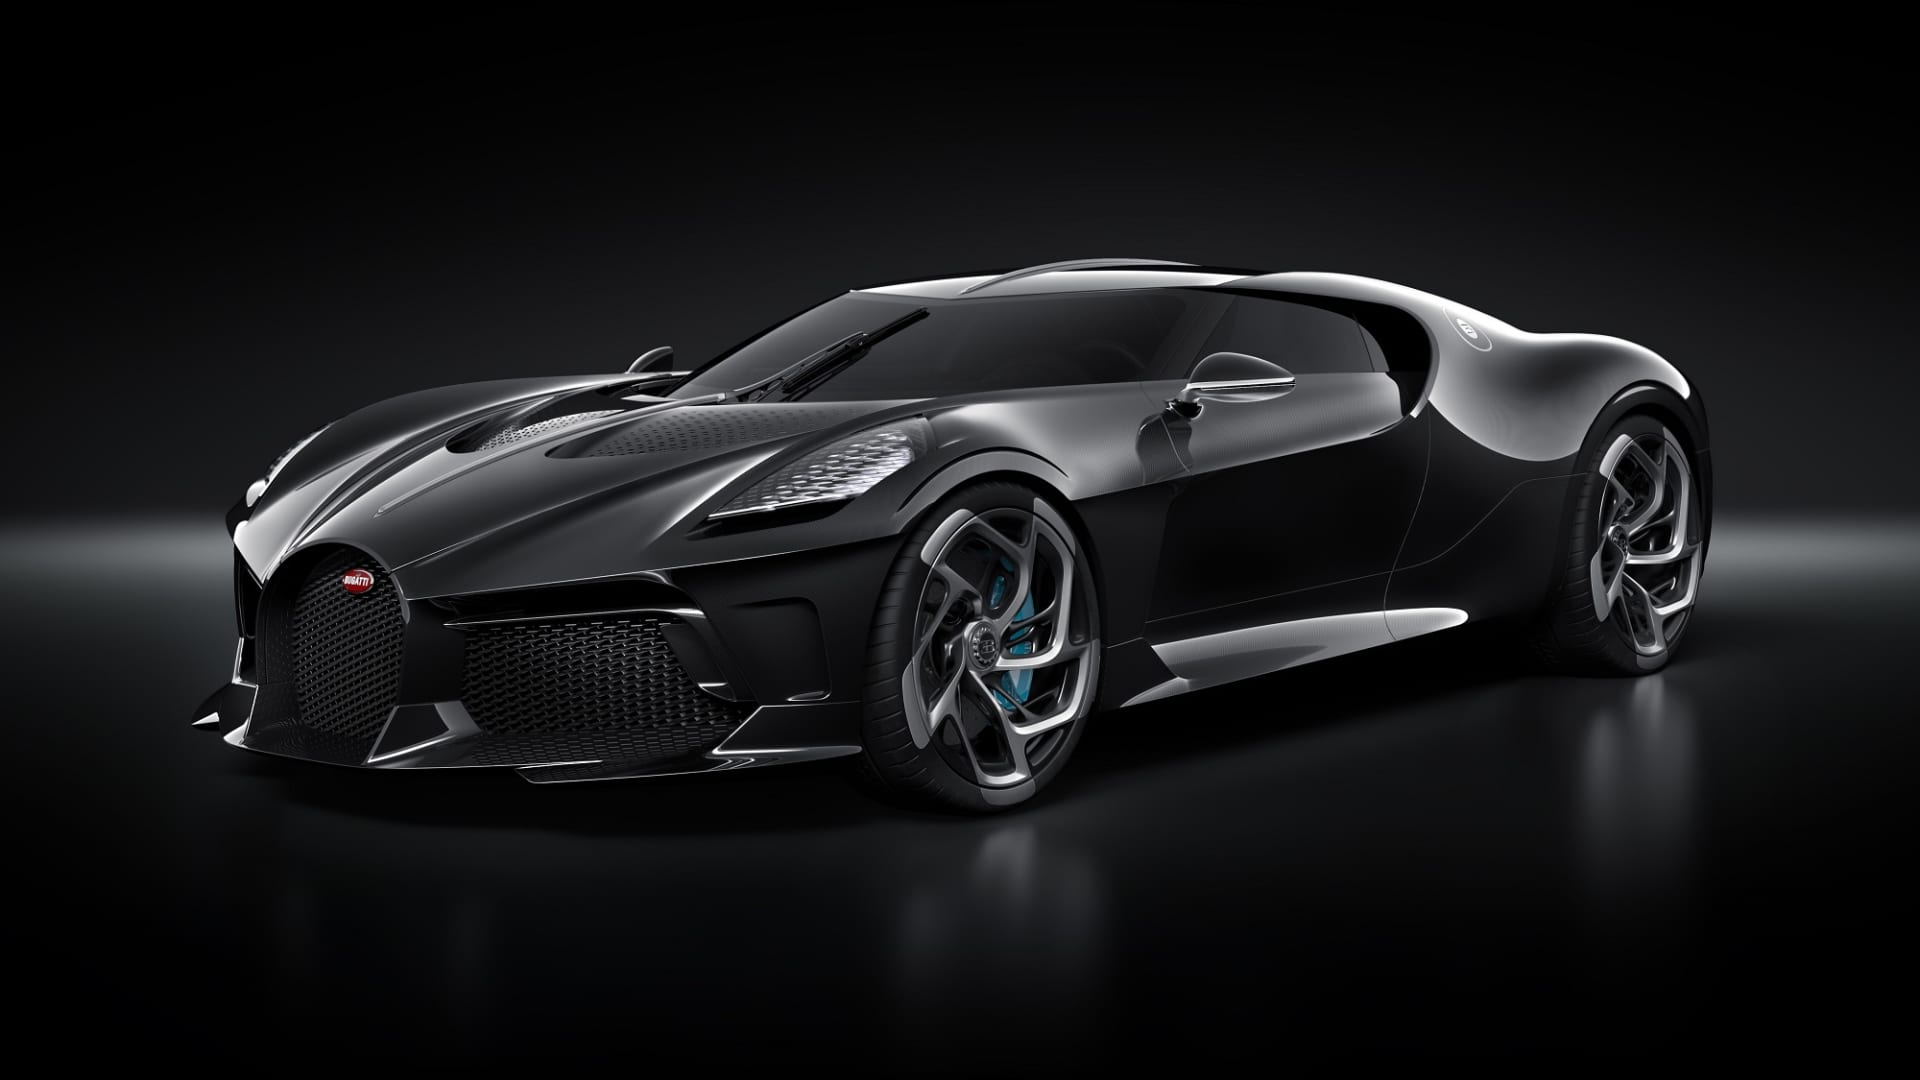 Take a look: Bugatti's La Voiture Noire car just sold for $19 million